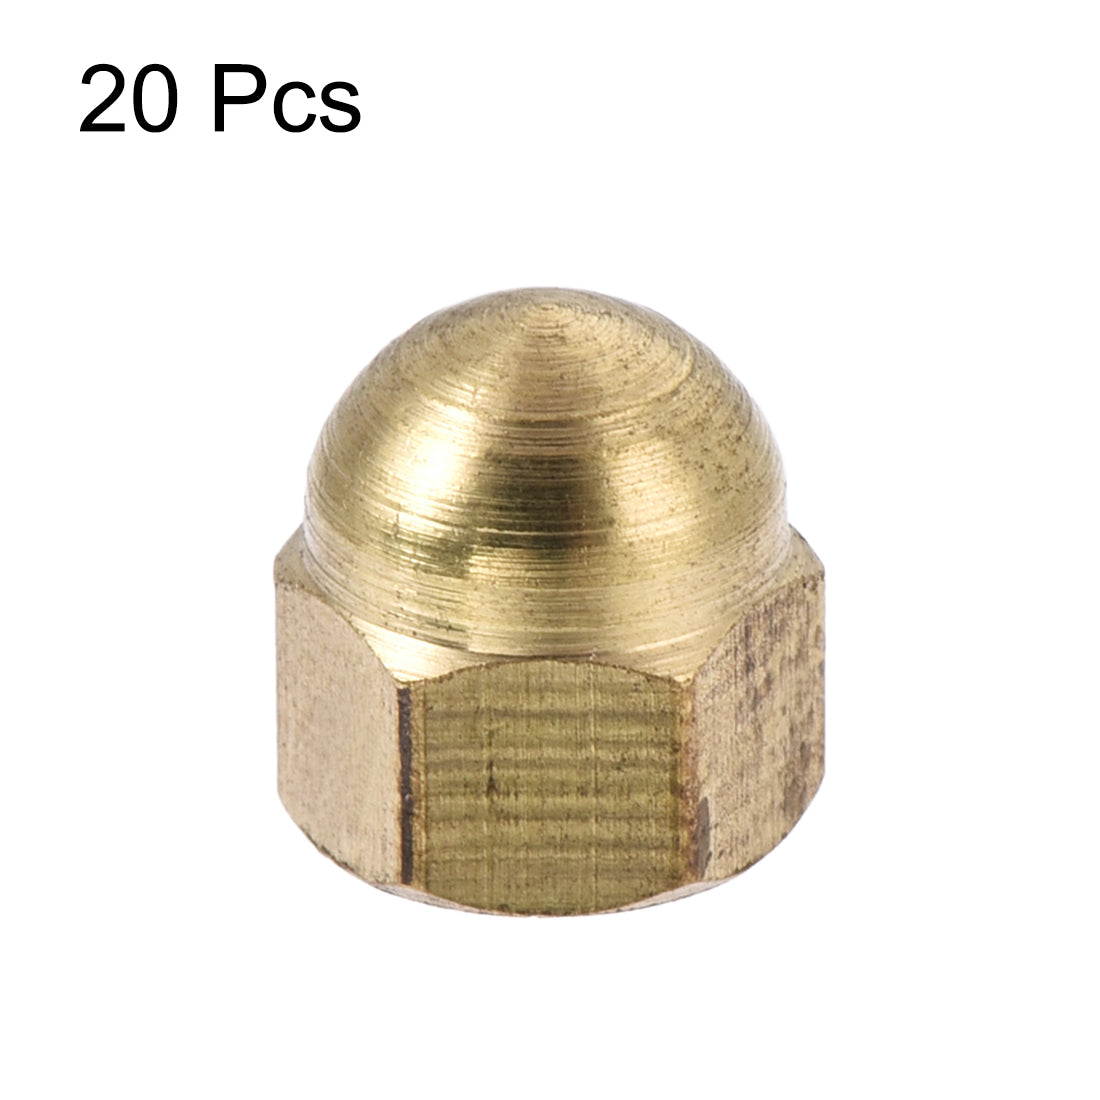 Uxcell Uxcell M3 Thread Dia Dome Head Brass Cap Acorn Hex Nuts 20pcs